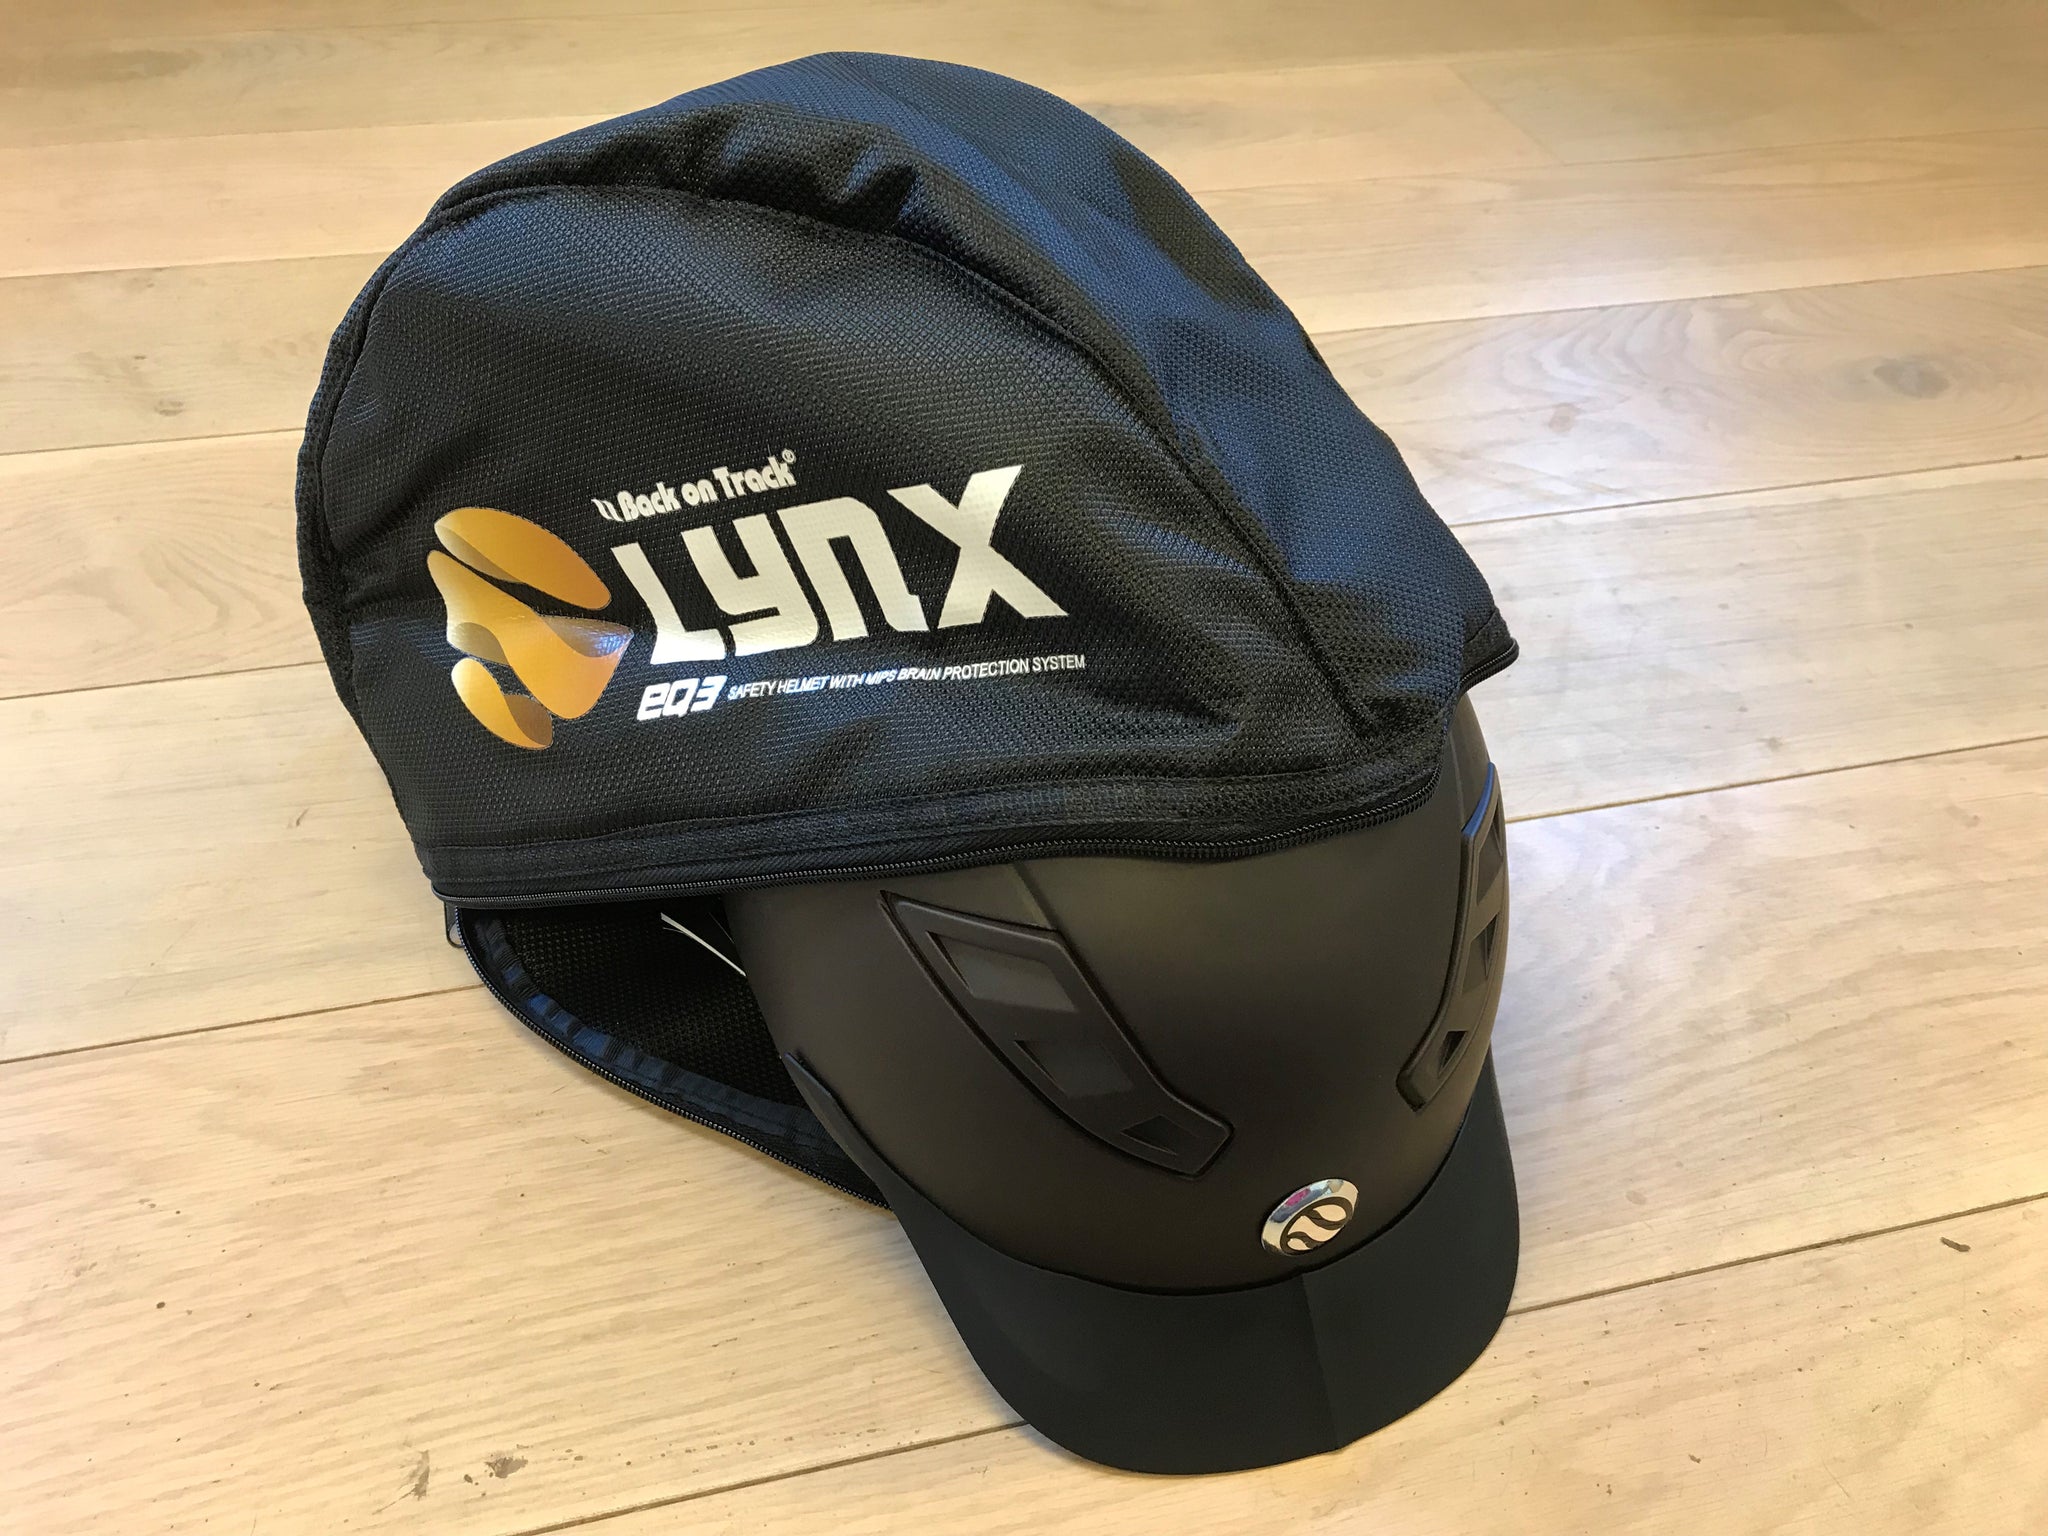 Taske til Lynx Ridehjelm – Back on Track Danmark Officiel Shop